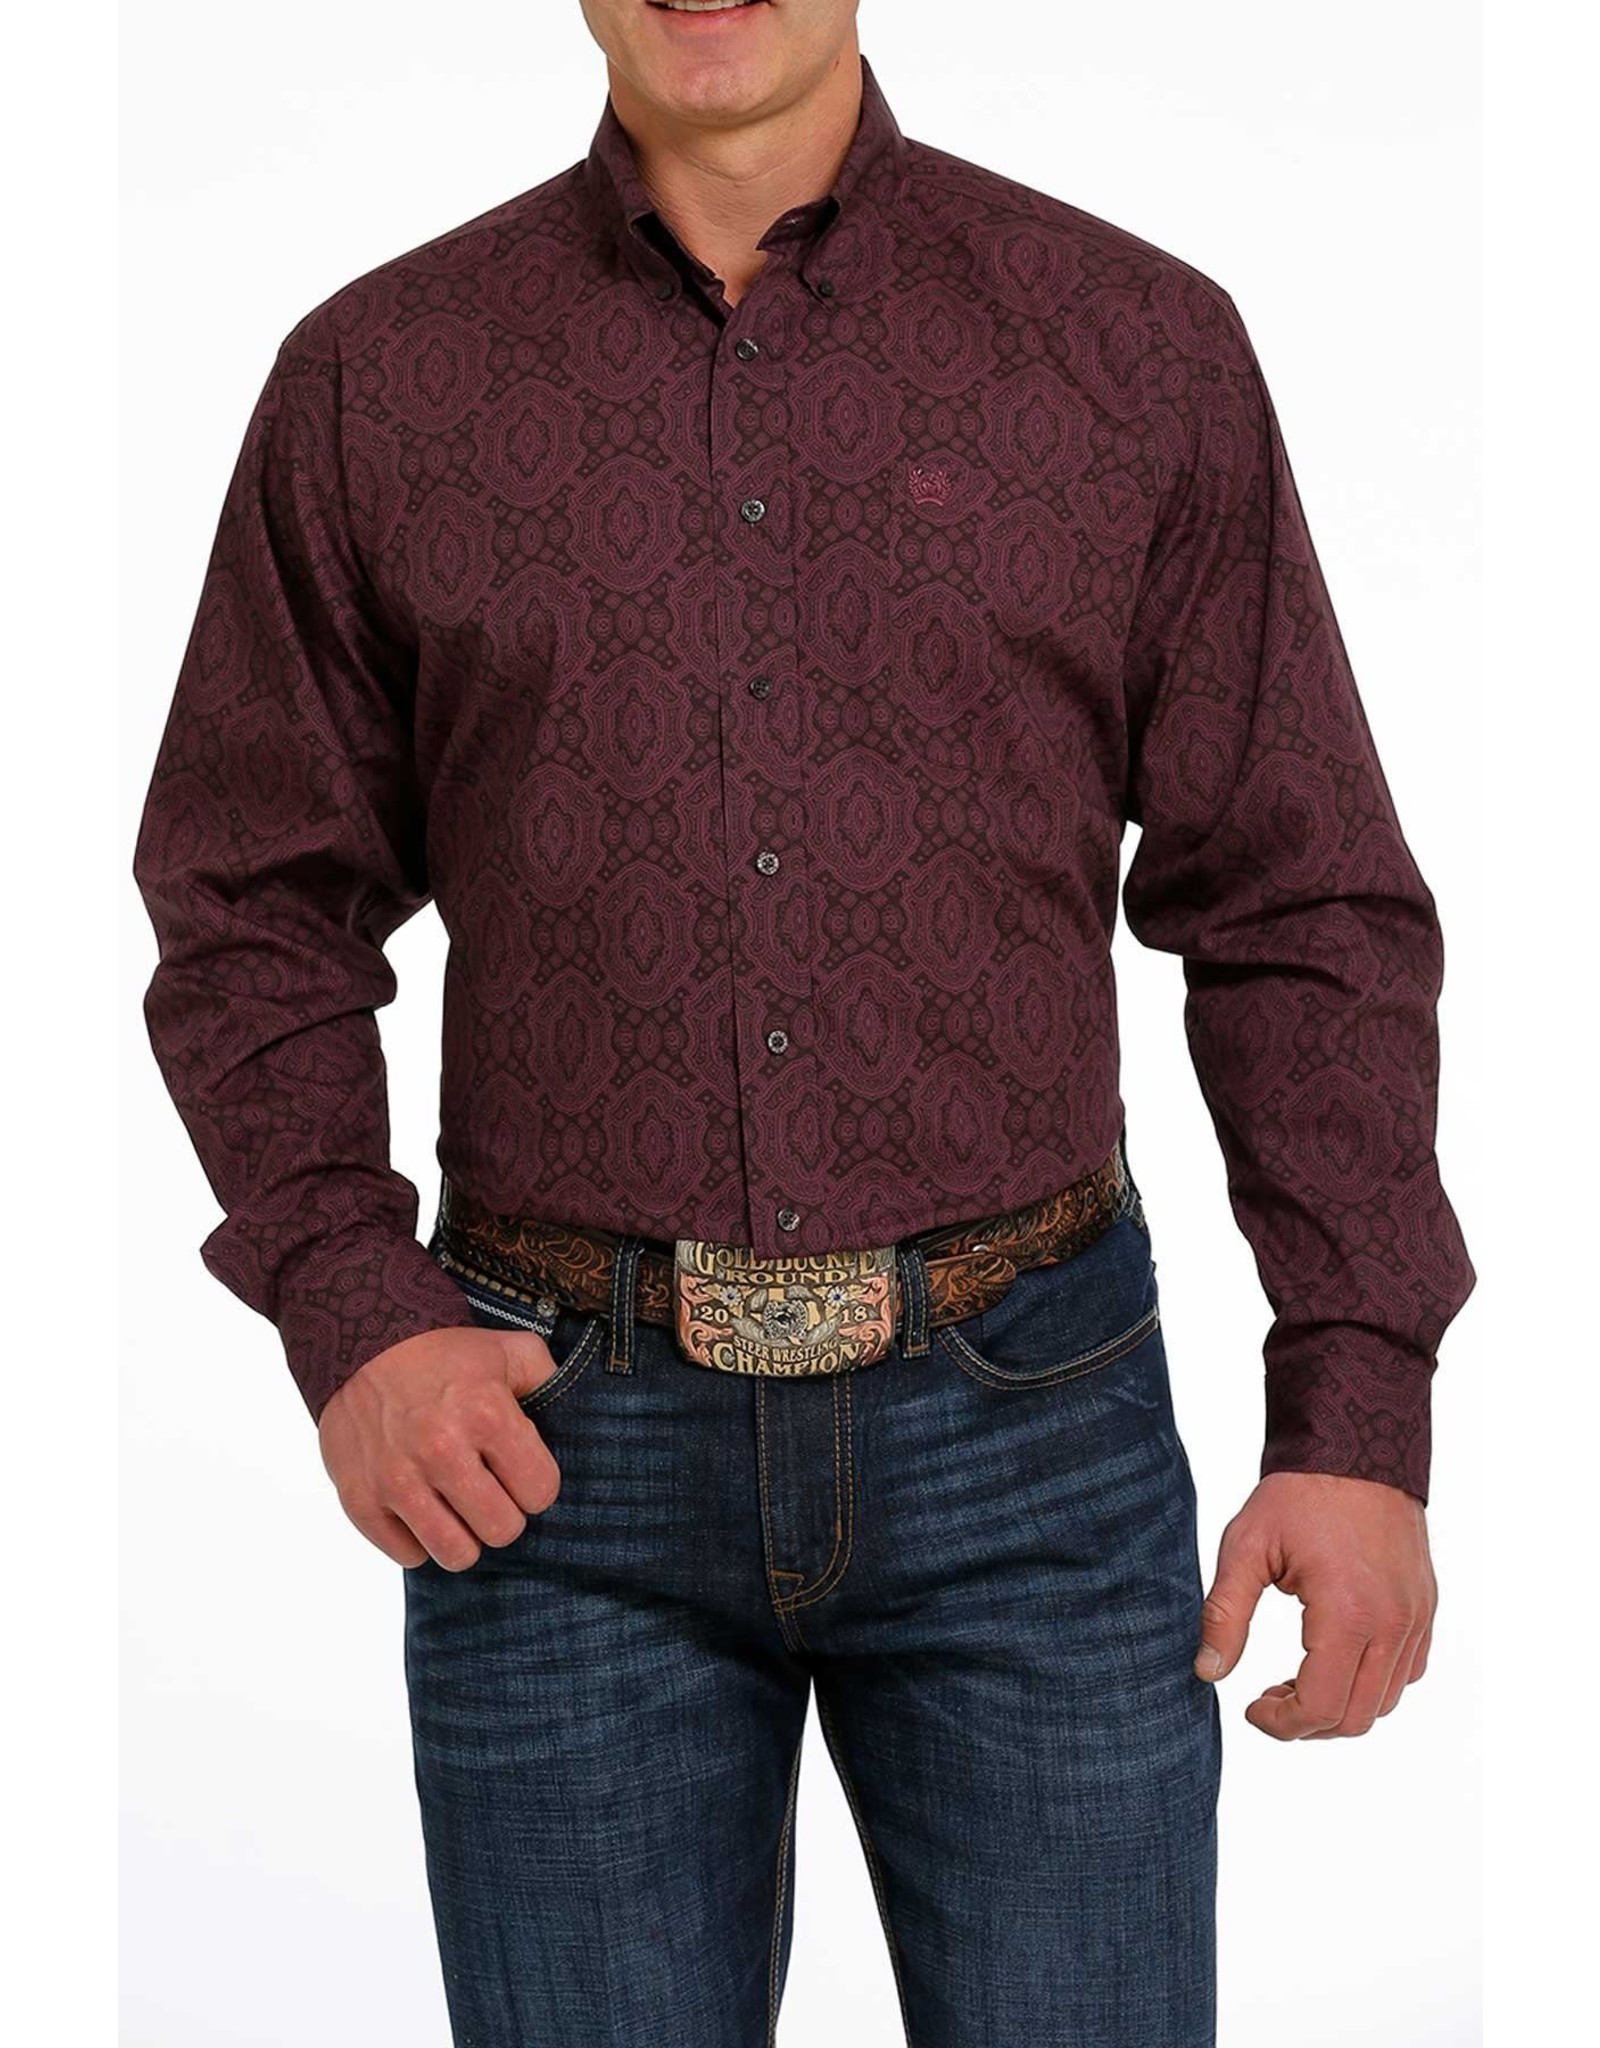 Cinch Men's Classic Fit  Purple Medallion Print MTW1105485 Western Button Up Shirt